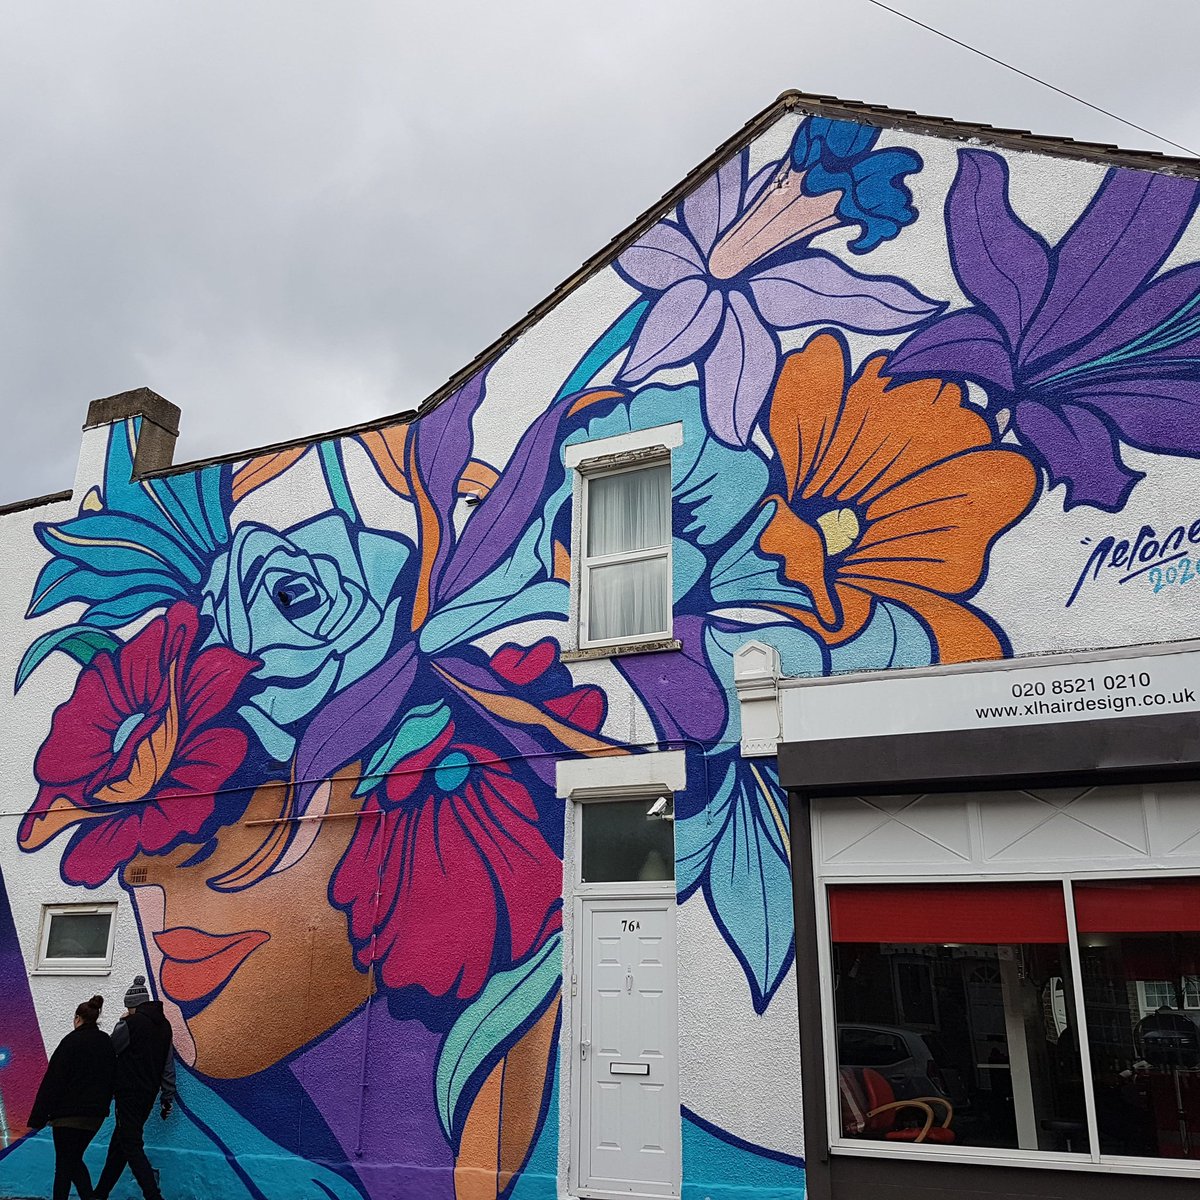 Amazing floral explosion of colour by Nerone in Walthamstow, east London. #lovelondon #eastlondon #walthamstow #awesomestow #e17 #walklondonseelondonfeellondon #thestreetisthebiggestfreeartgallery  #streetart #urbanart #urbancanvas #art #nerone #londontourguide #bluebadgeguide